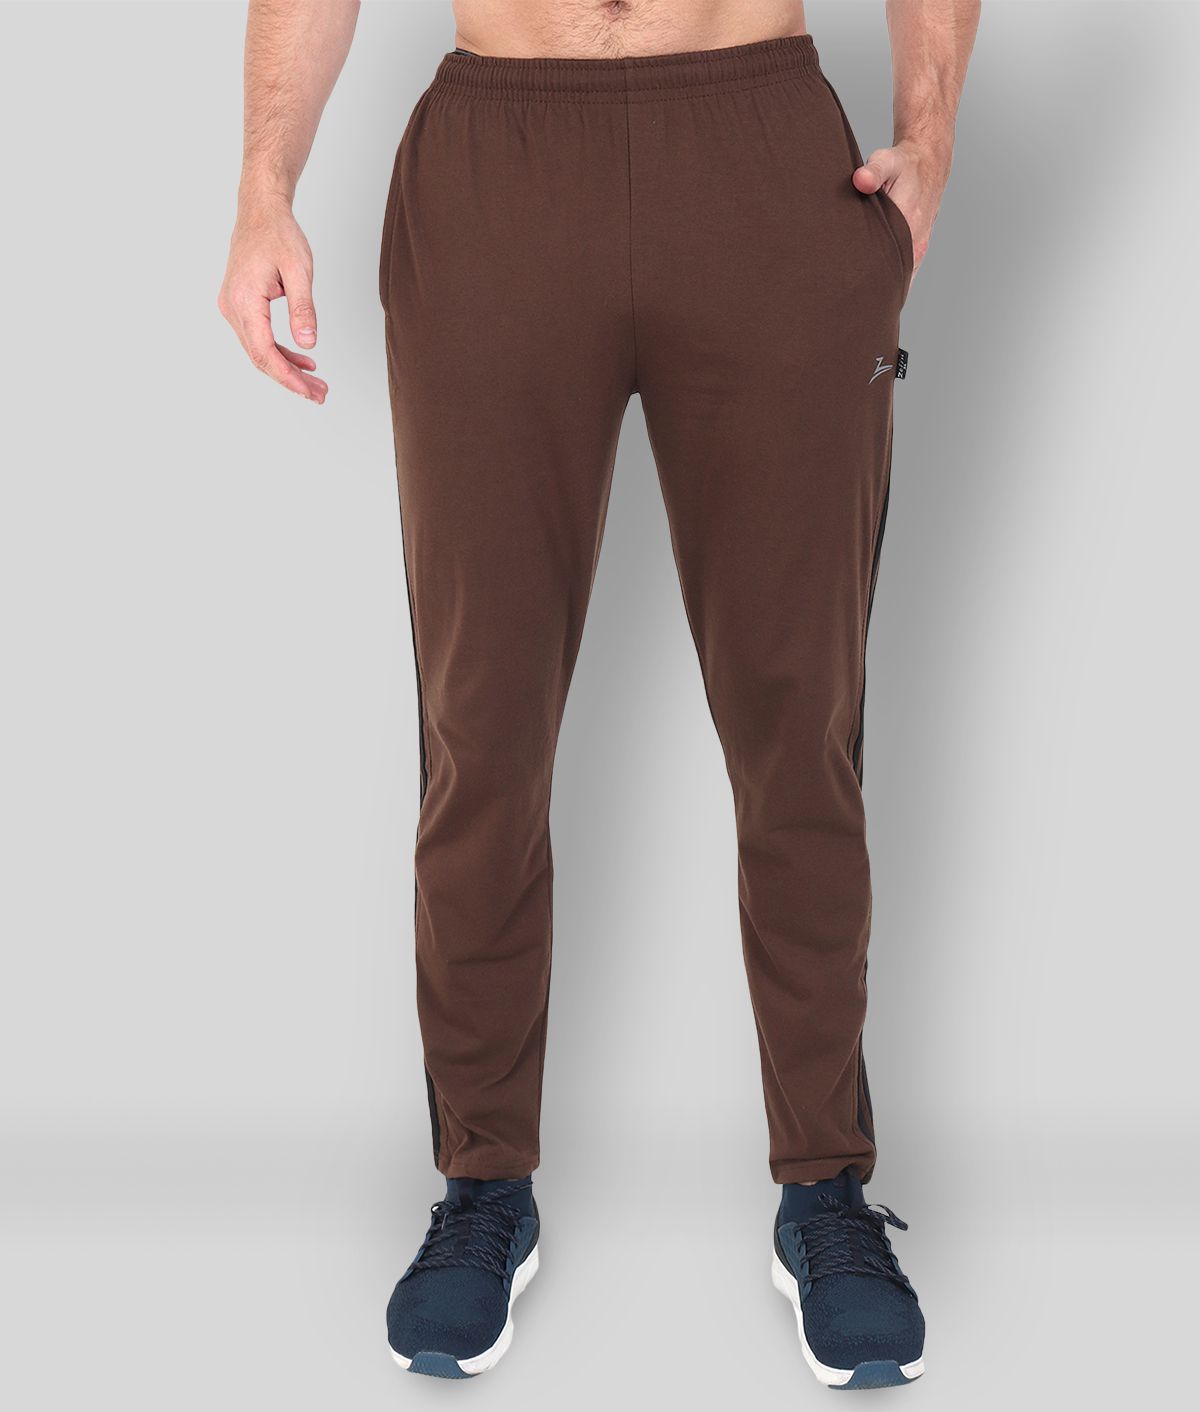     			Zeffit - Brown Cotton Blend Men's Trackpants ( Pack of 1 )